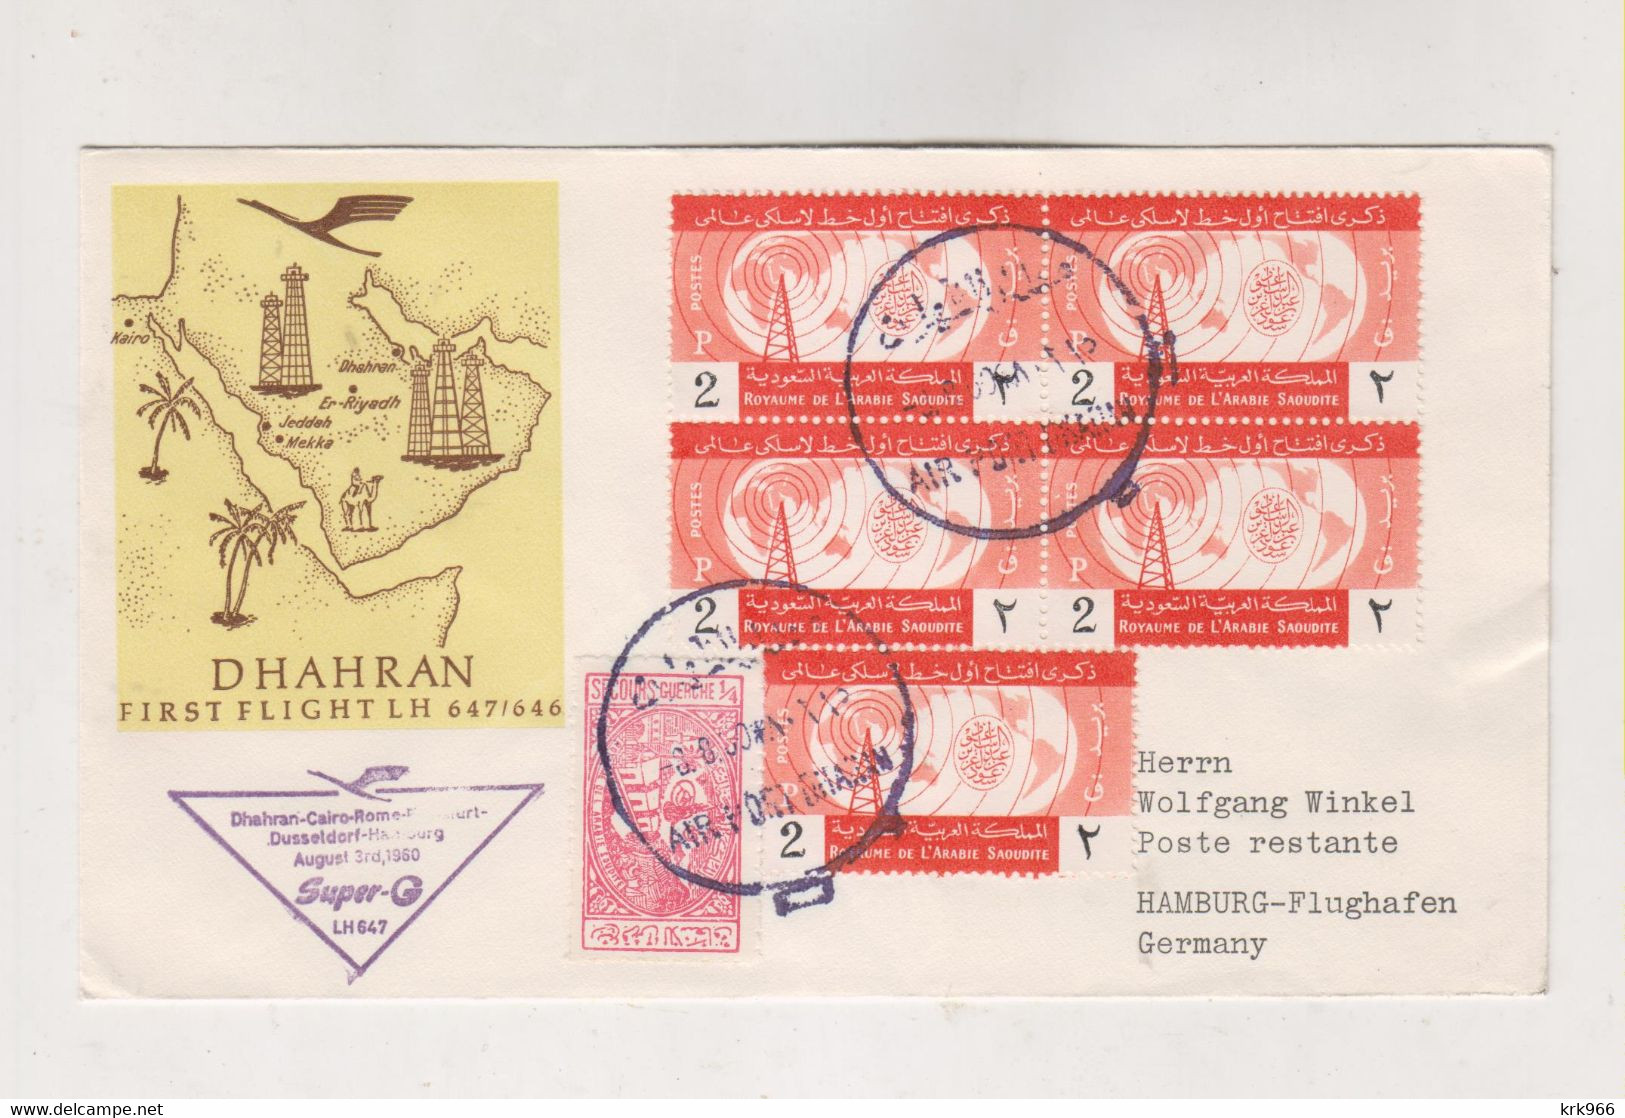 SAUDI ARABIA 1960 First Flight Cover DHAHRAN -CAIRO-ROMA-FRANKFURT-DUSSELDORF-HAMBURG - Arabie Saoudite